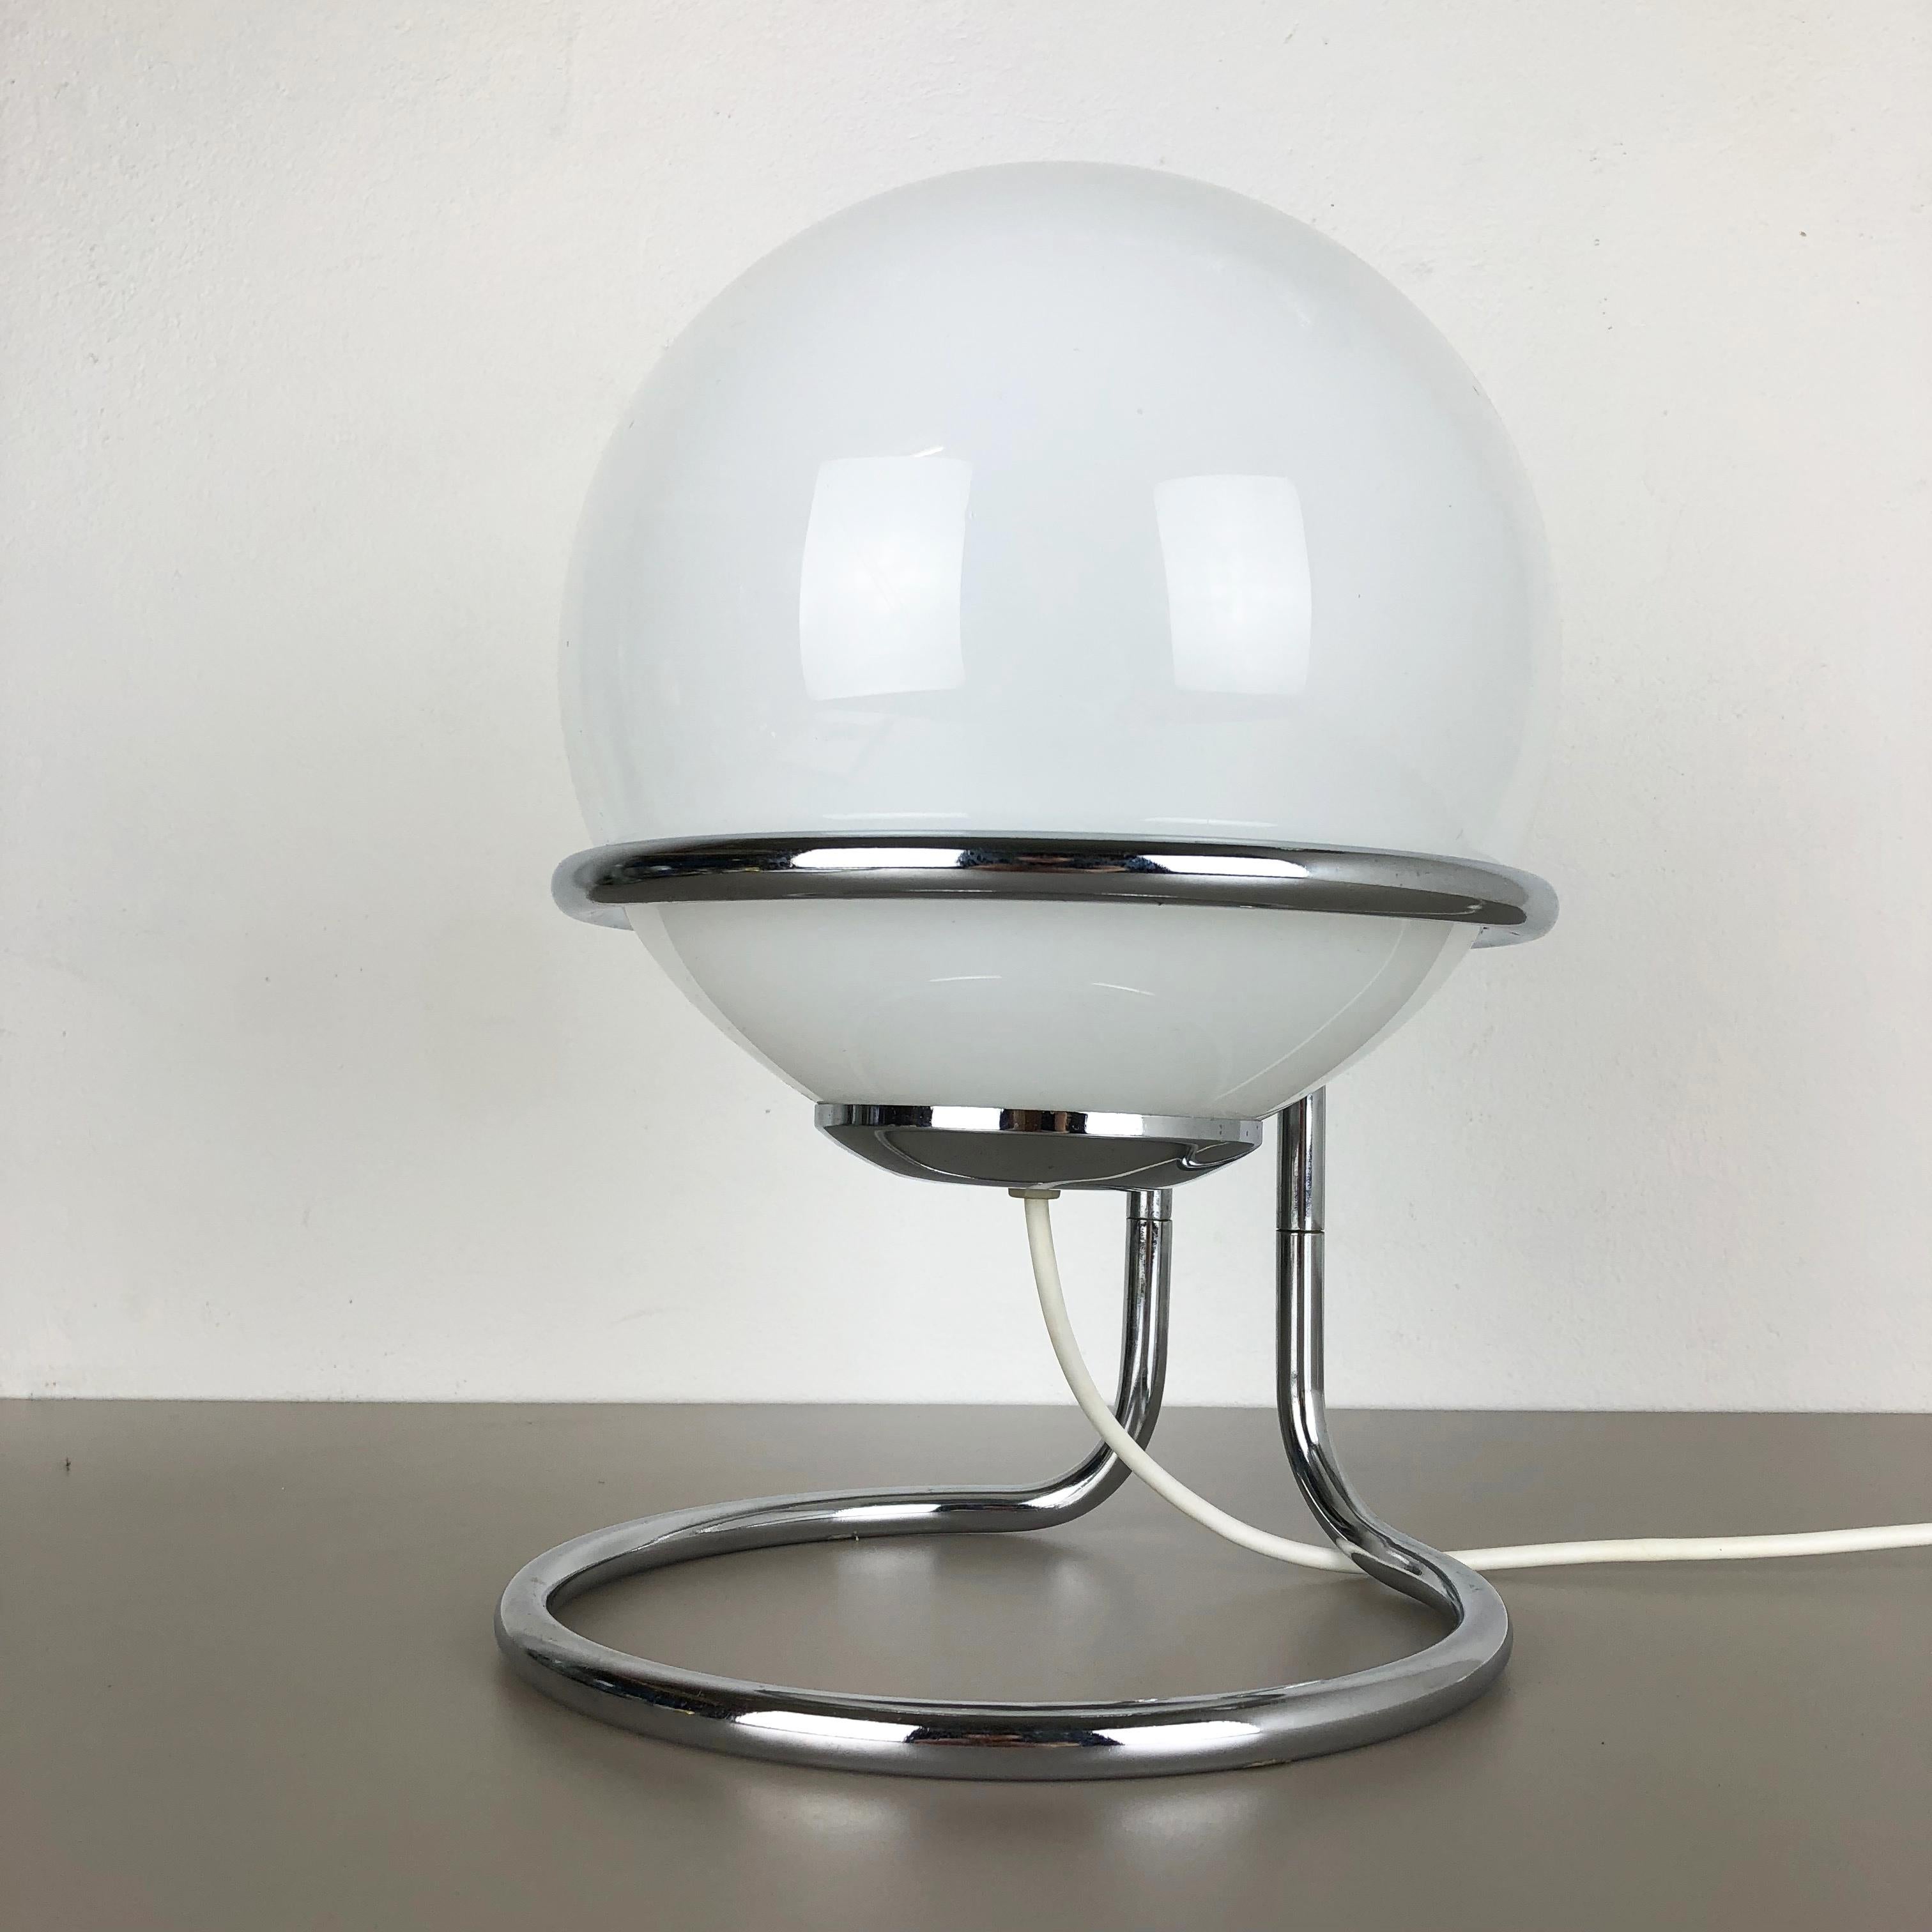 Original Modernist 1960s Sputnik Chromed Table Light by Honsel Lights, Germany 1